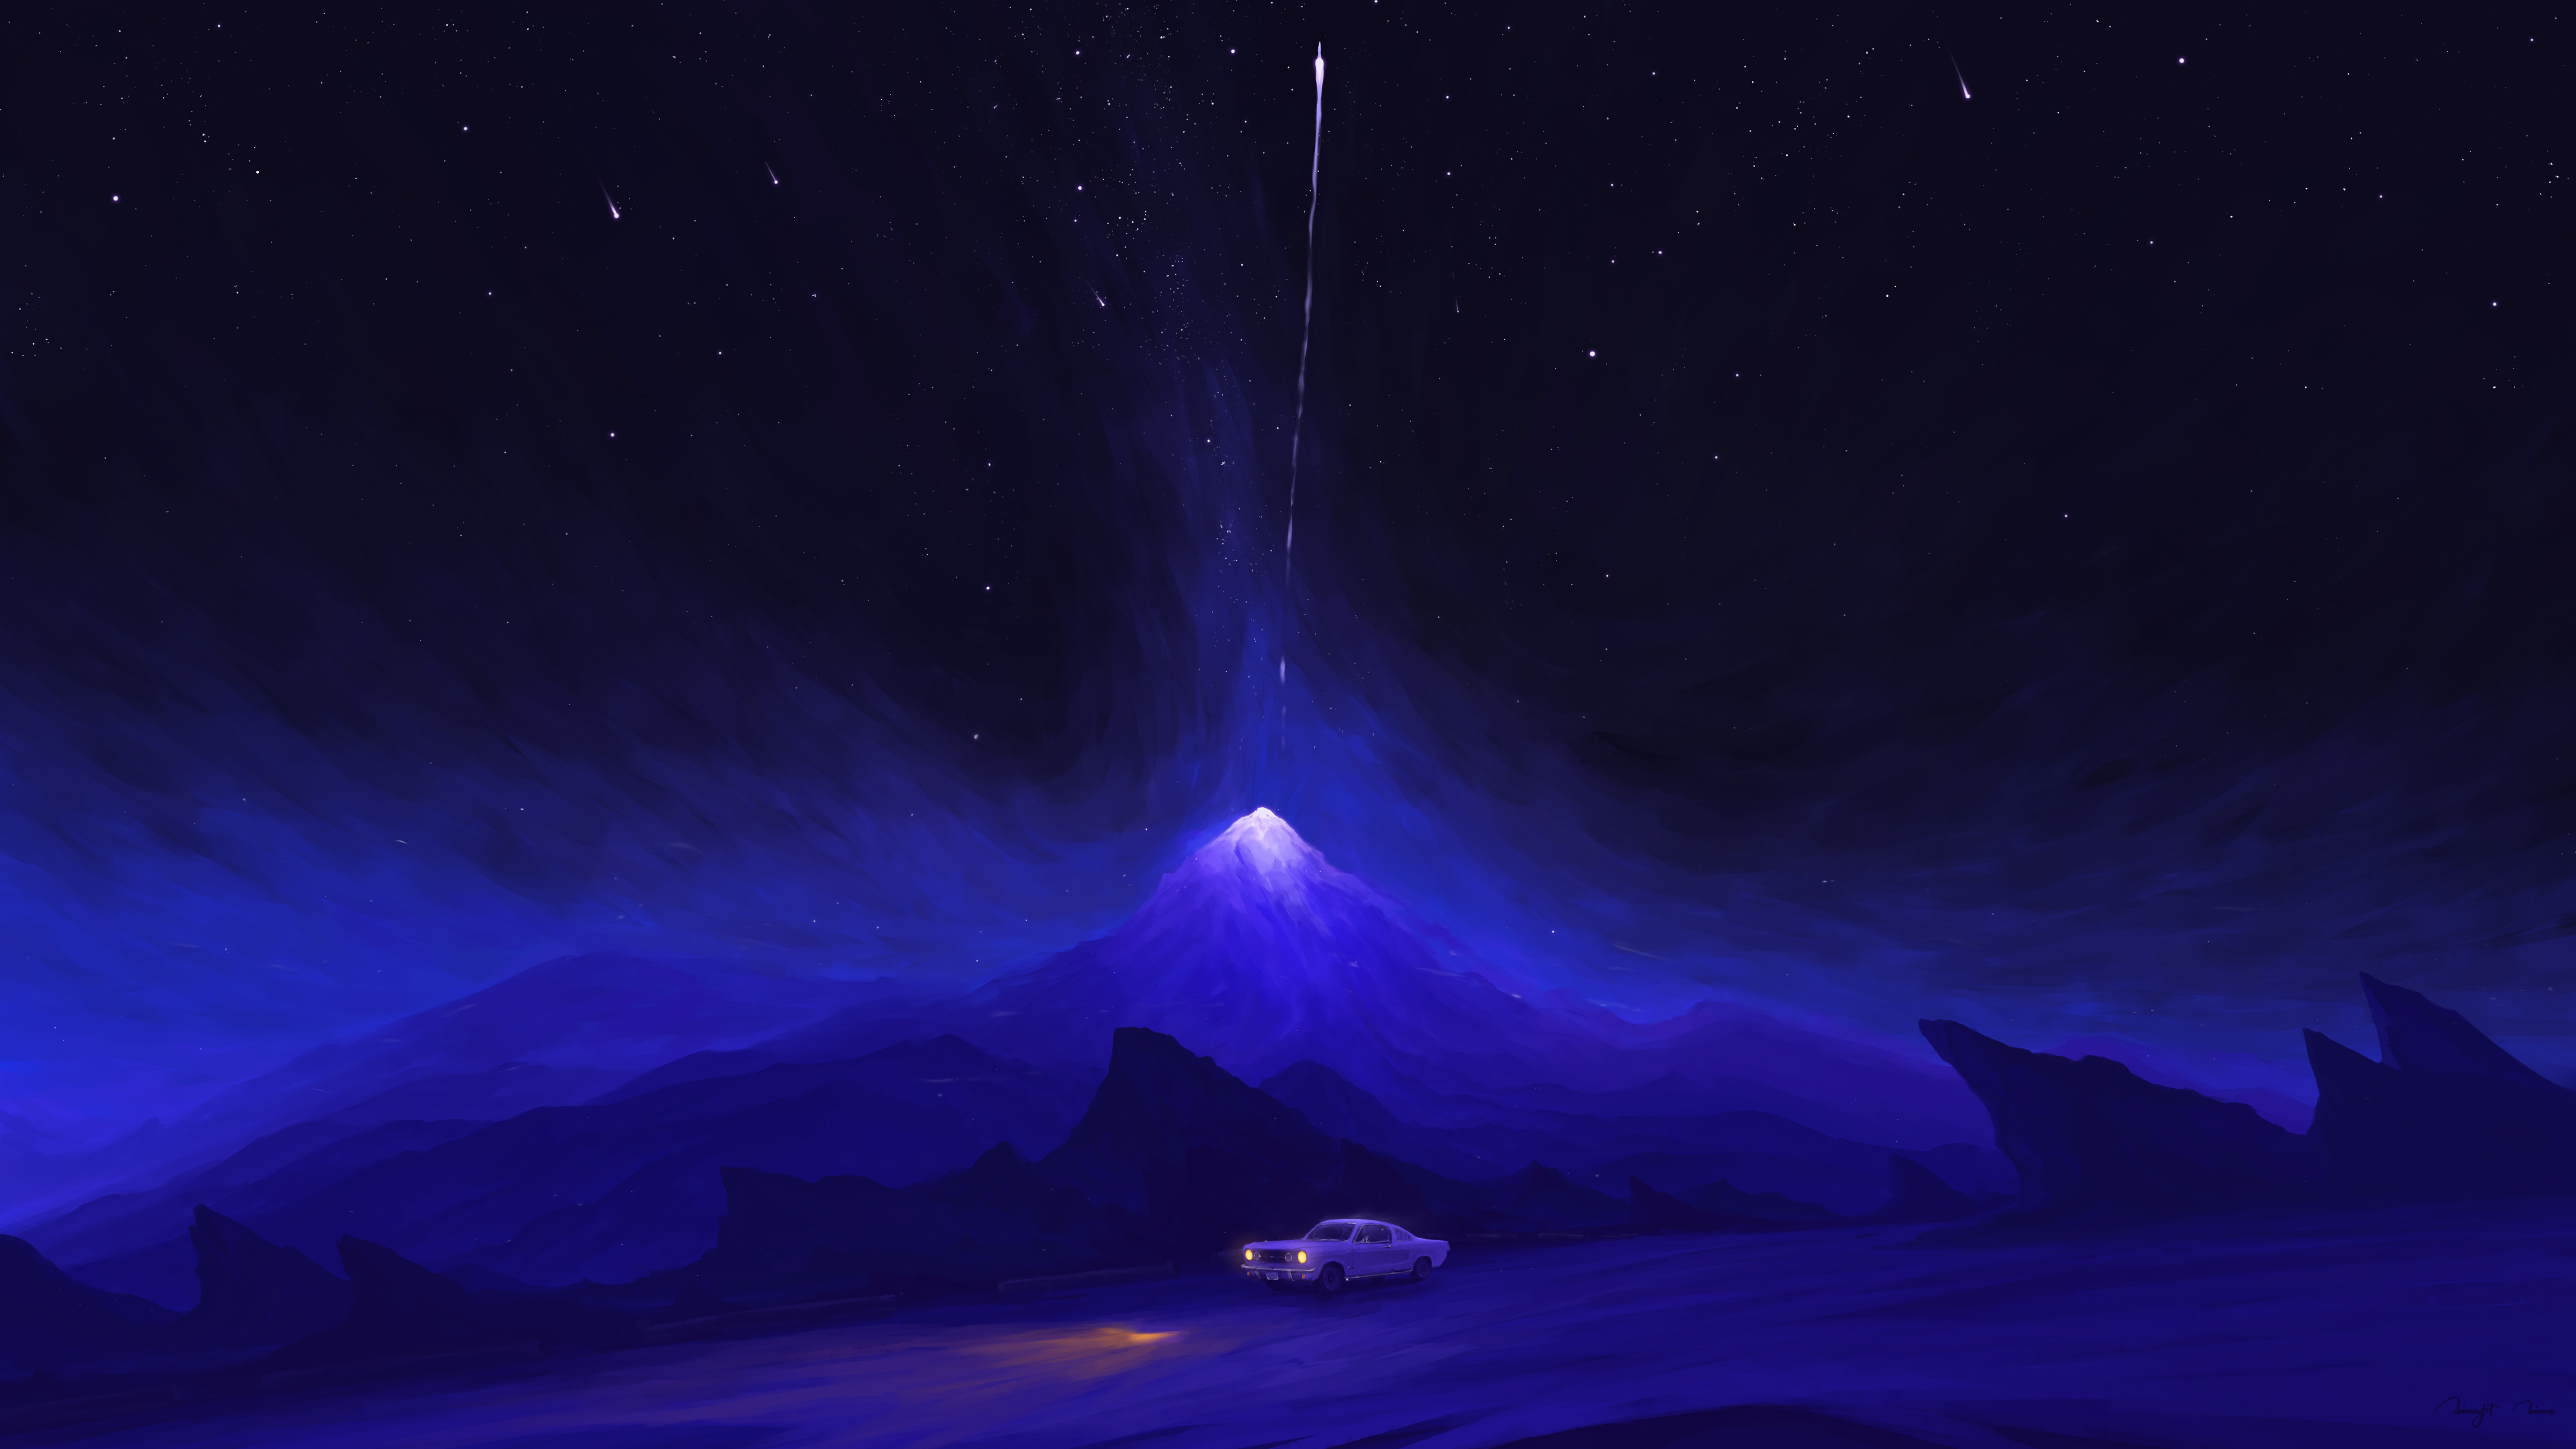 BisBiswas Digital Art Artwork Illustration Landscape Nature Night Nightscape Mountains Vehicle Car S 3840x2160